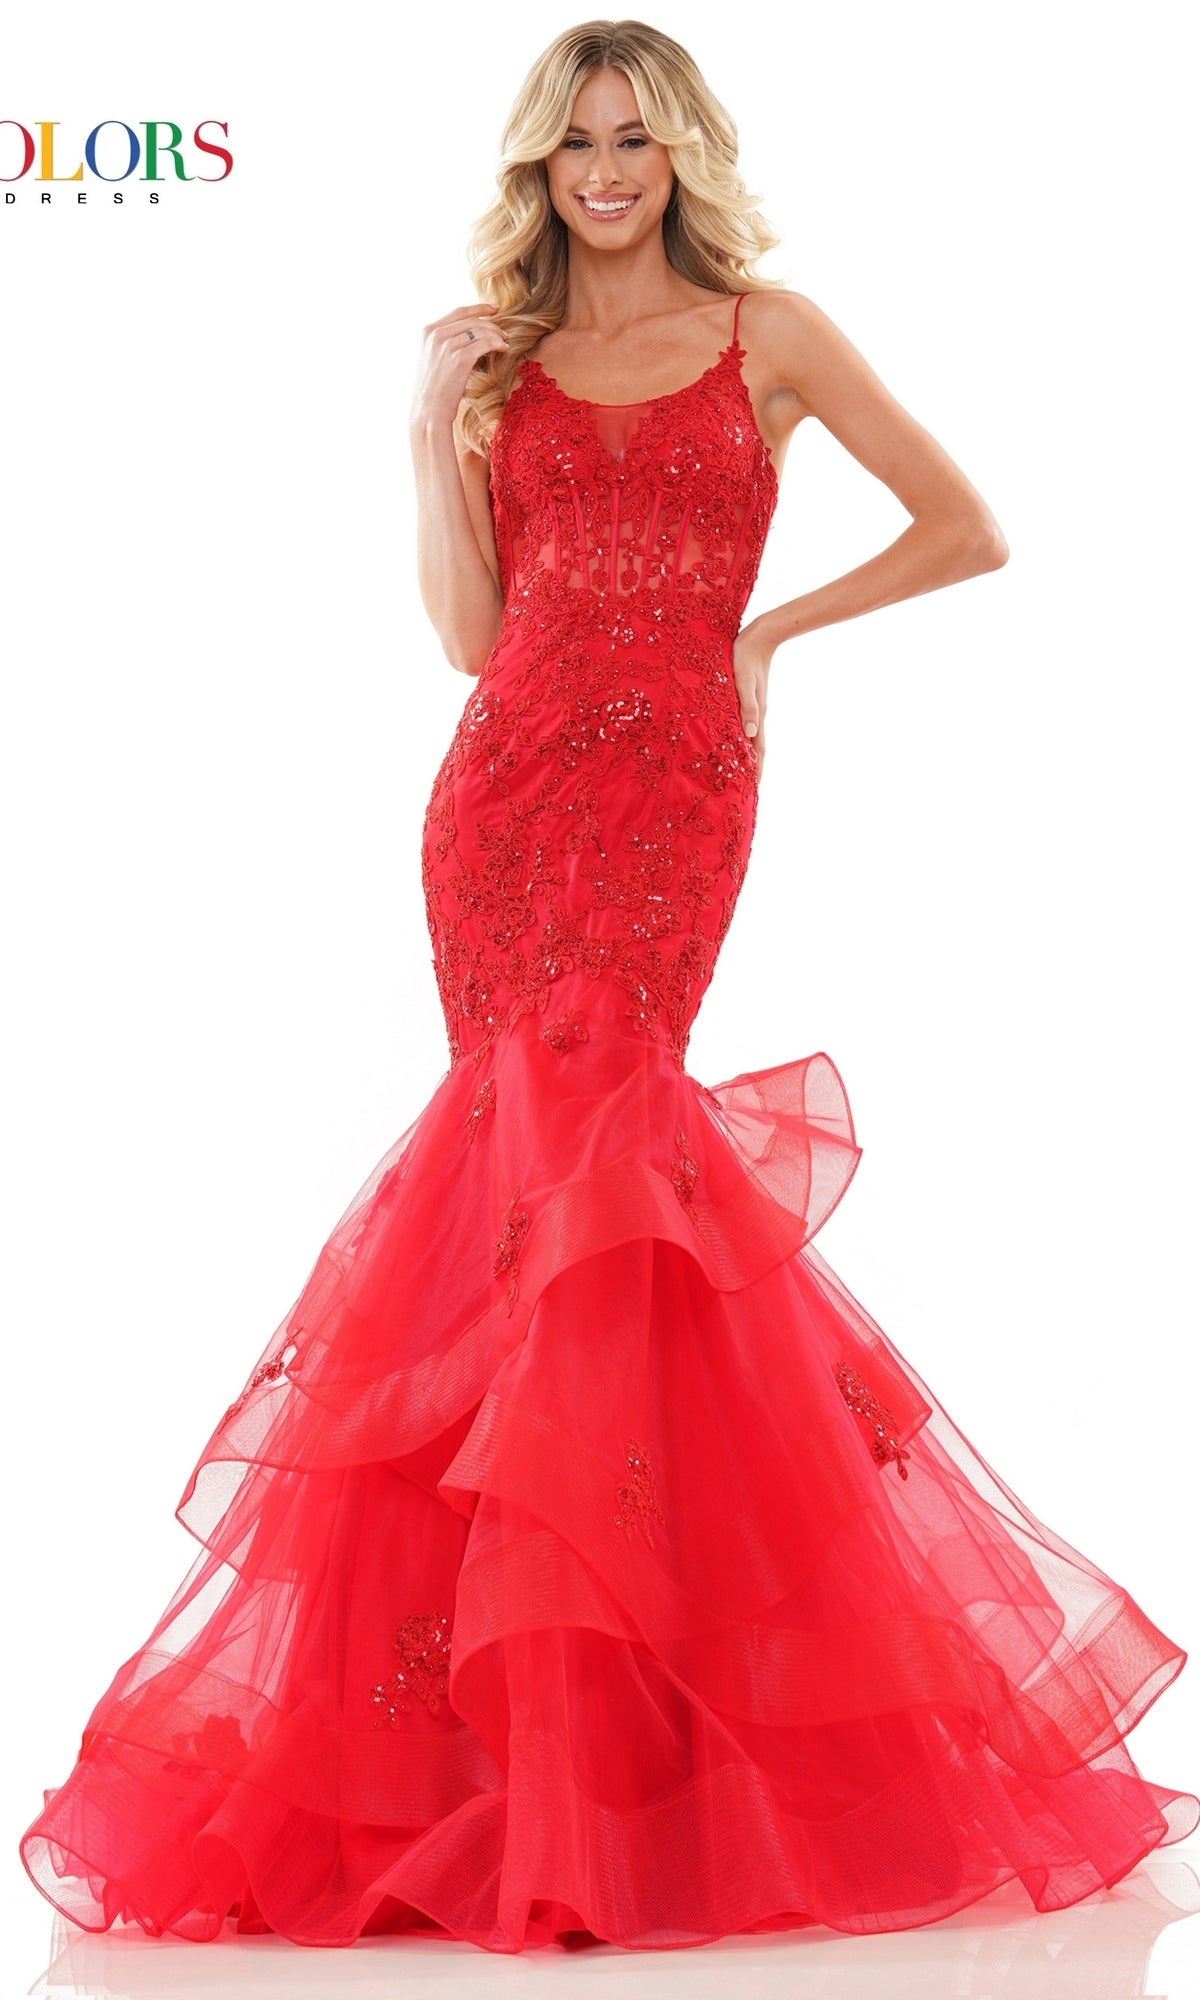  Colors Dress 2899 Formal Prom Dress